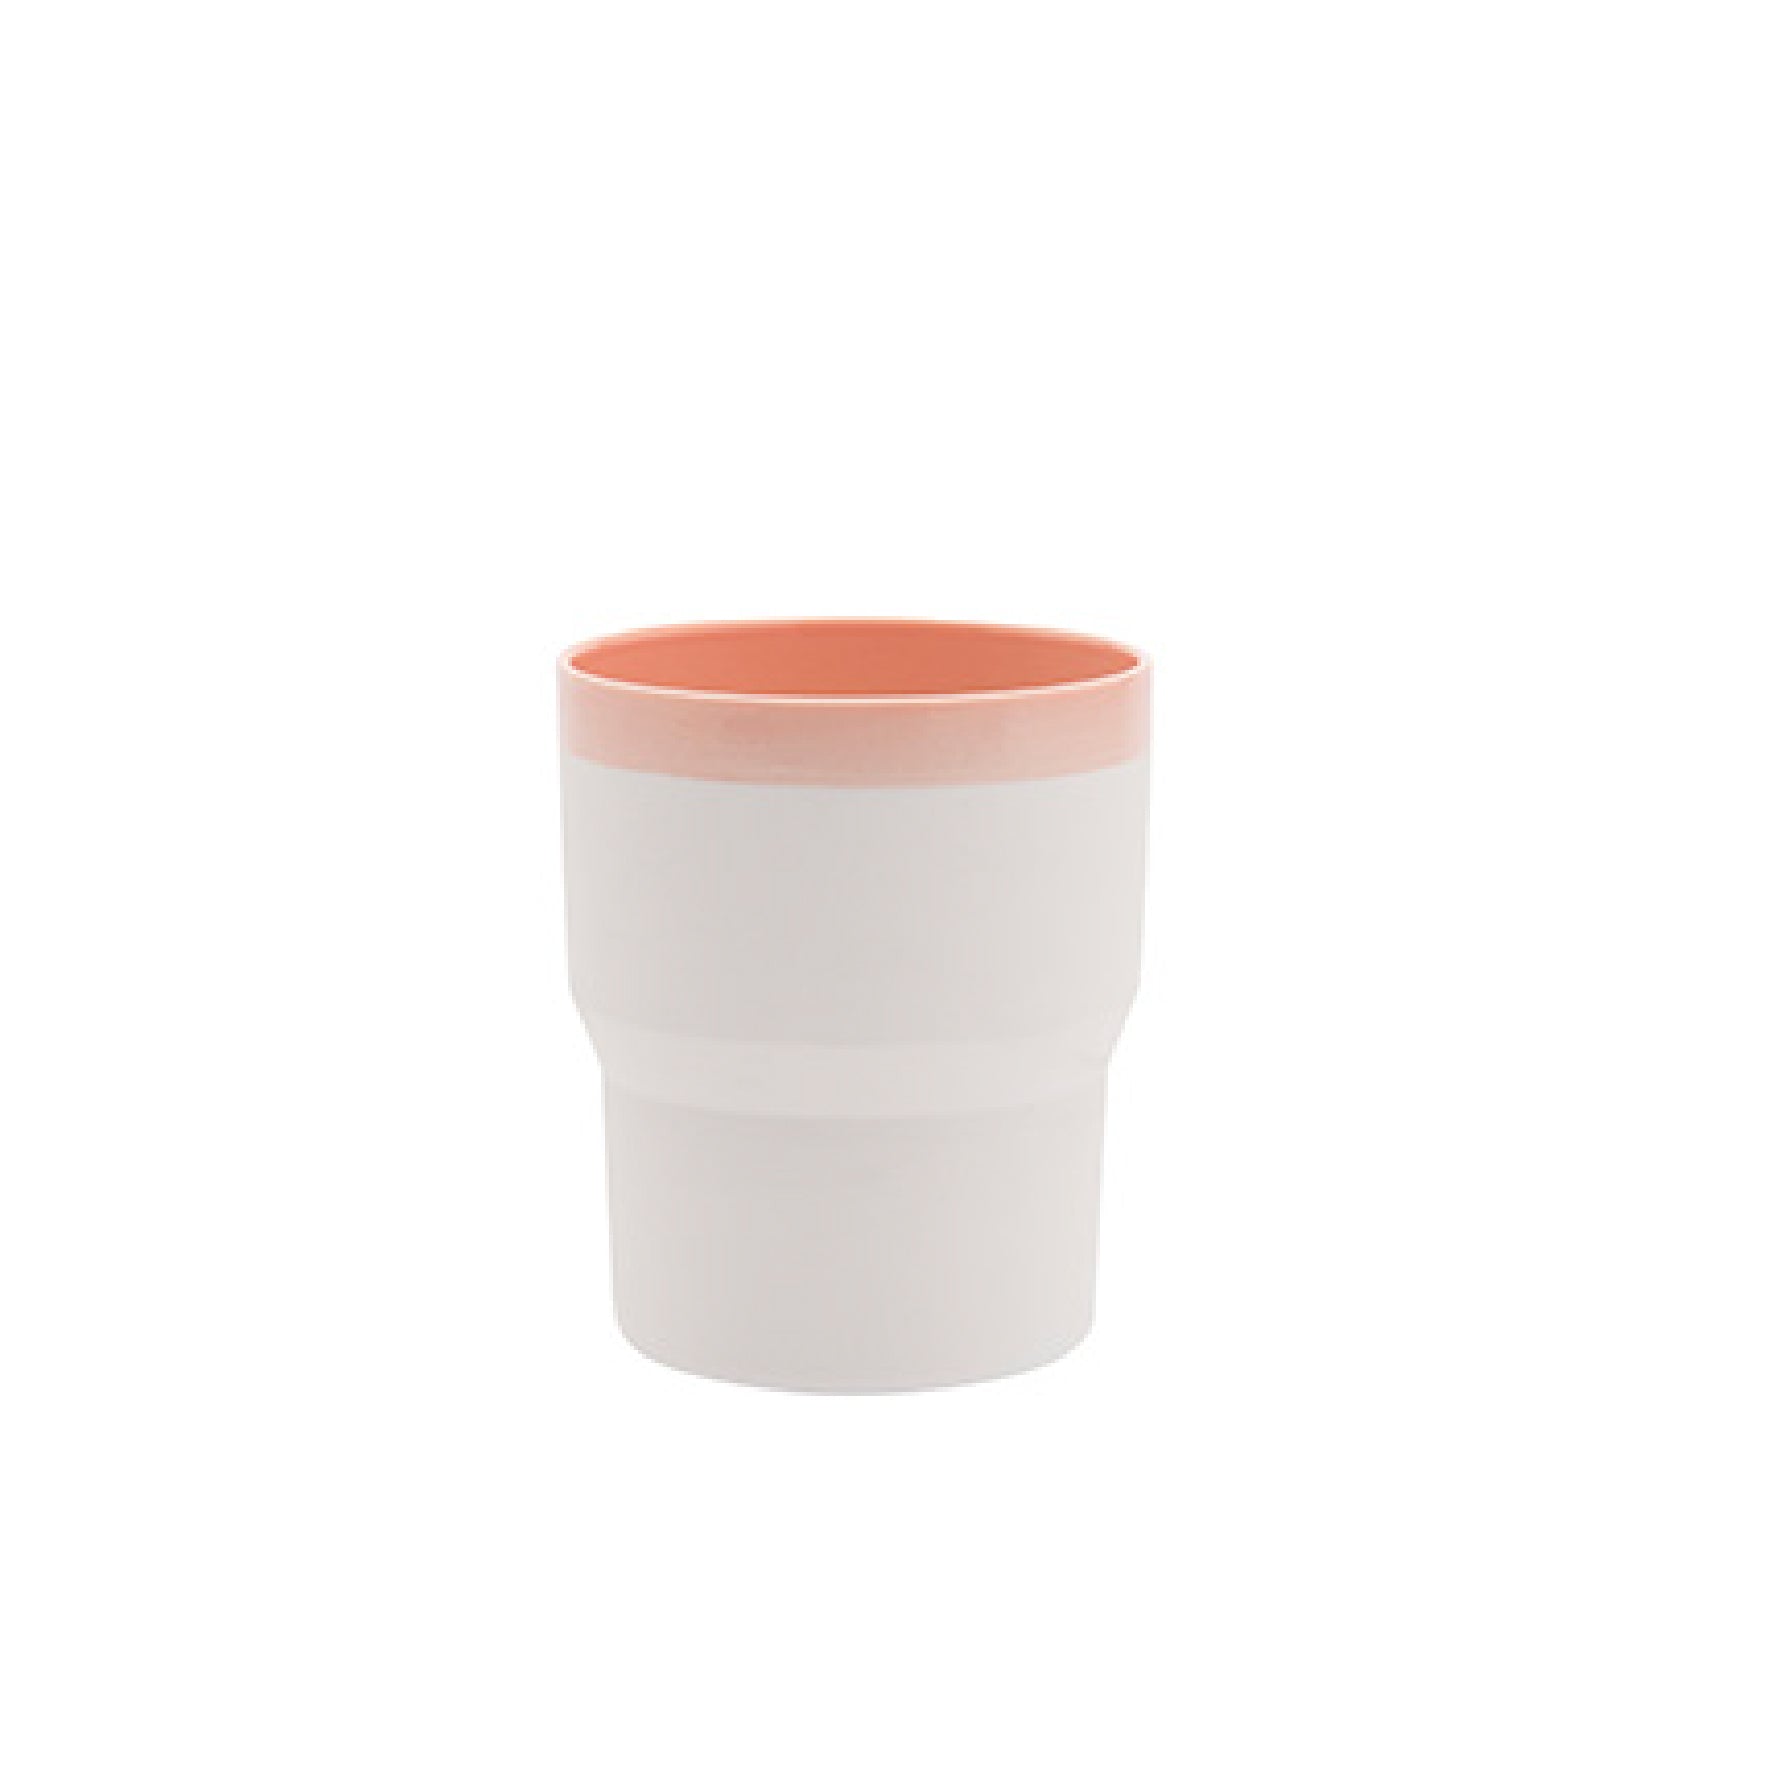 S&B Mug Pink 有田燒 咖啡杯 茶杯 1616 / arita japan